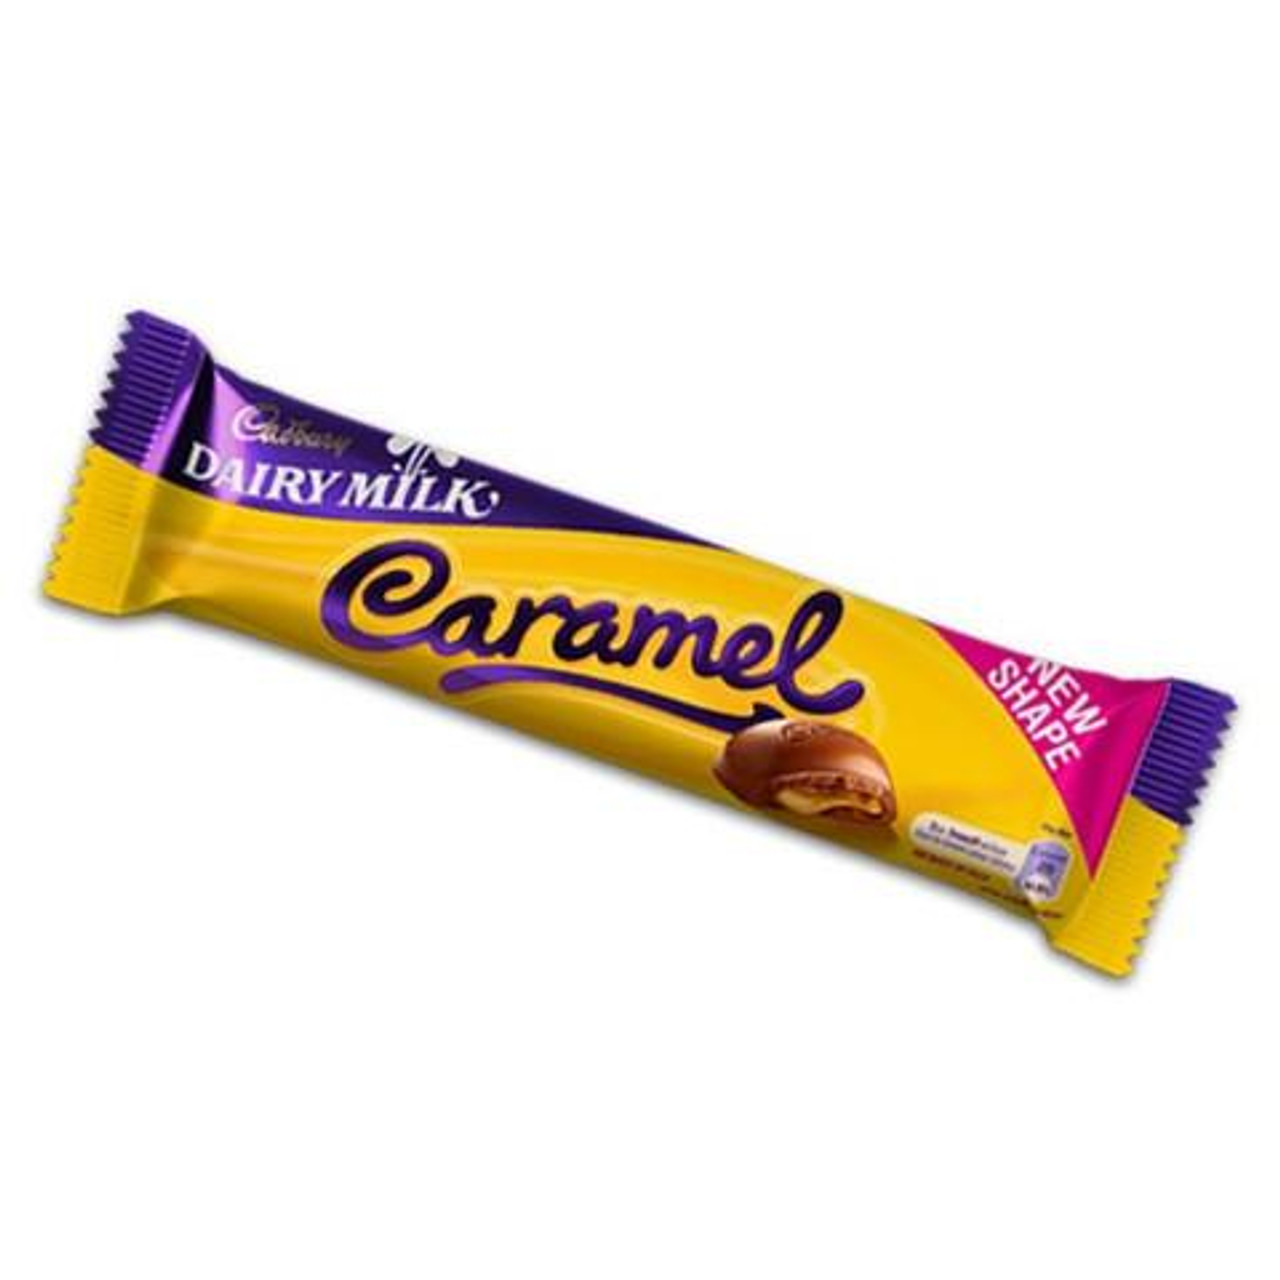 Cadbury - Dairy Milk Caramel, 45g